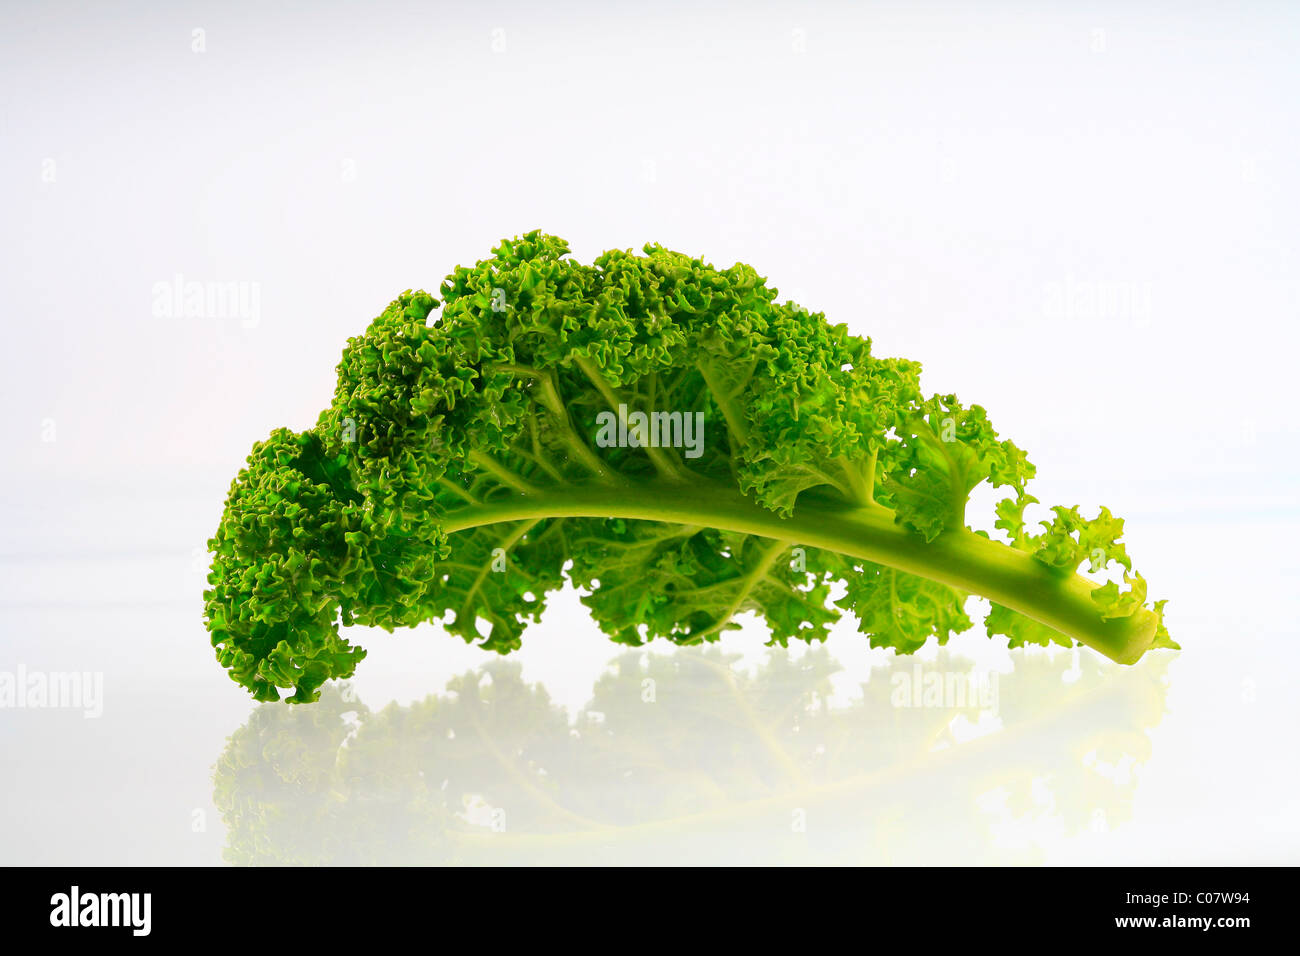 Kale or Borecole Stock Photo